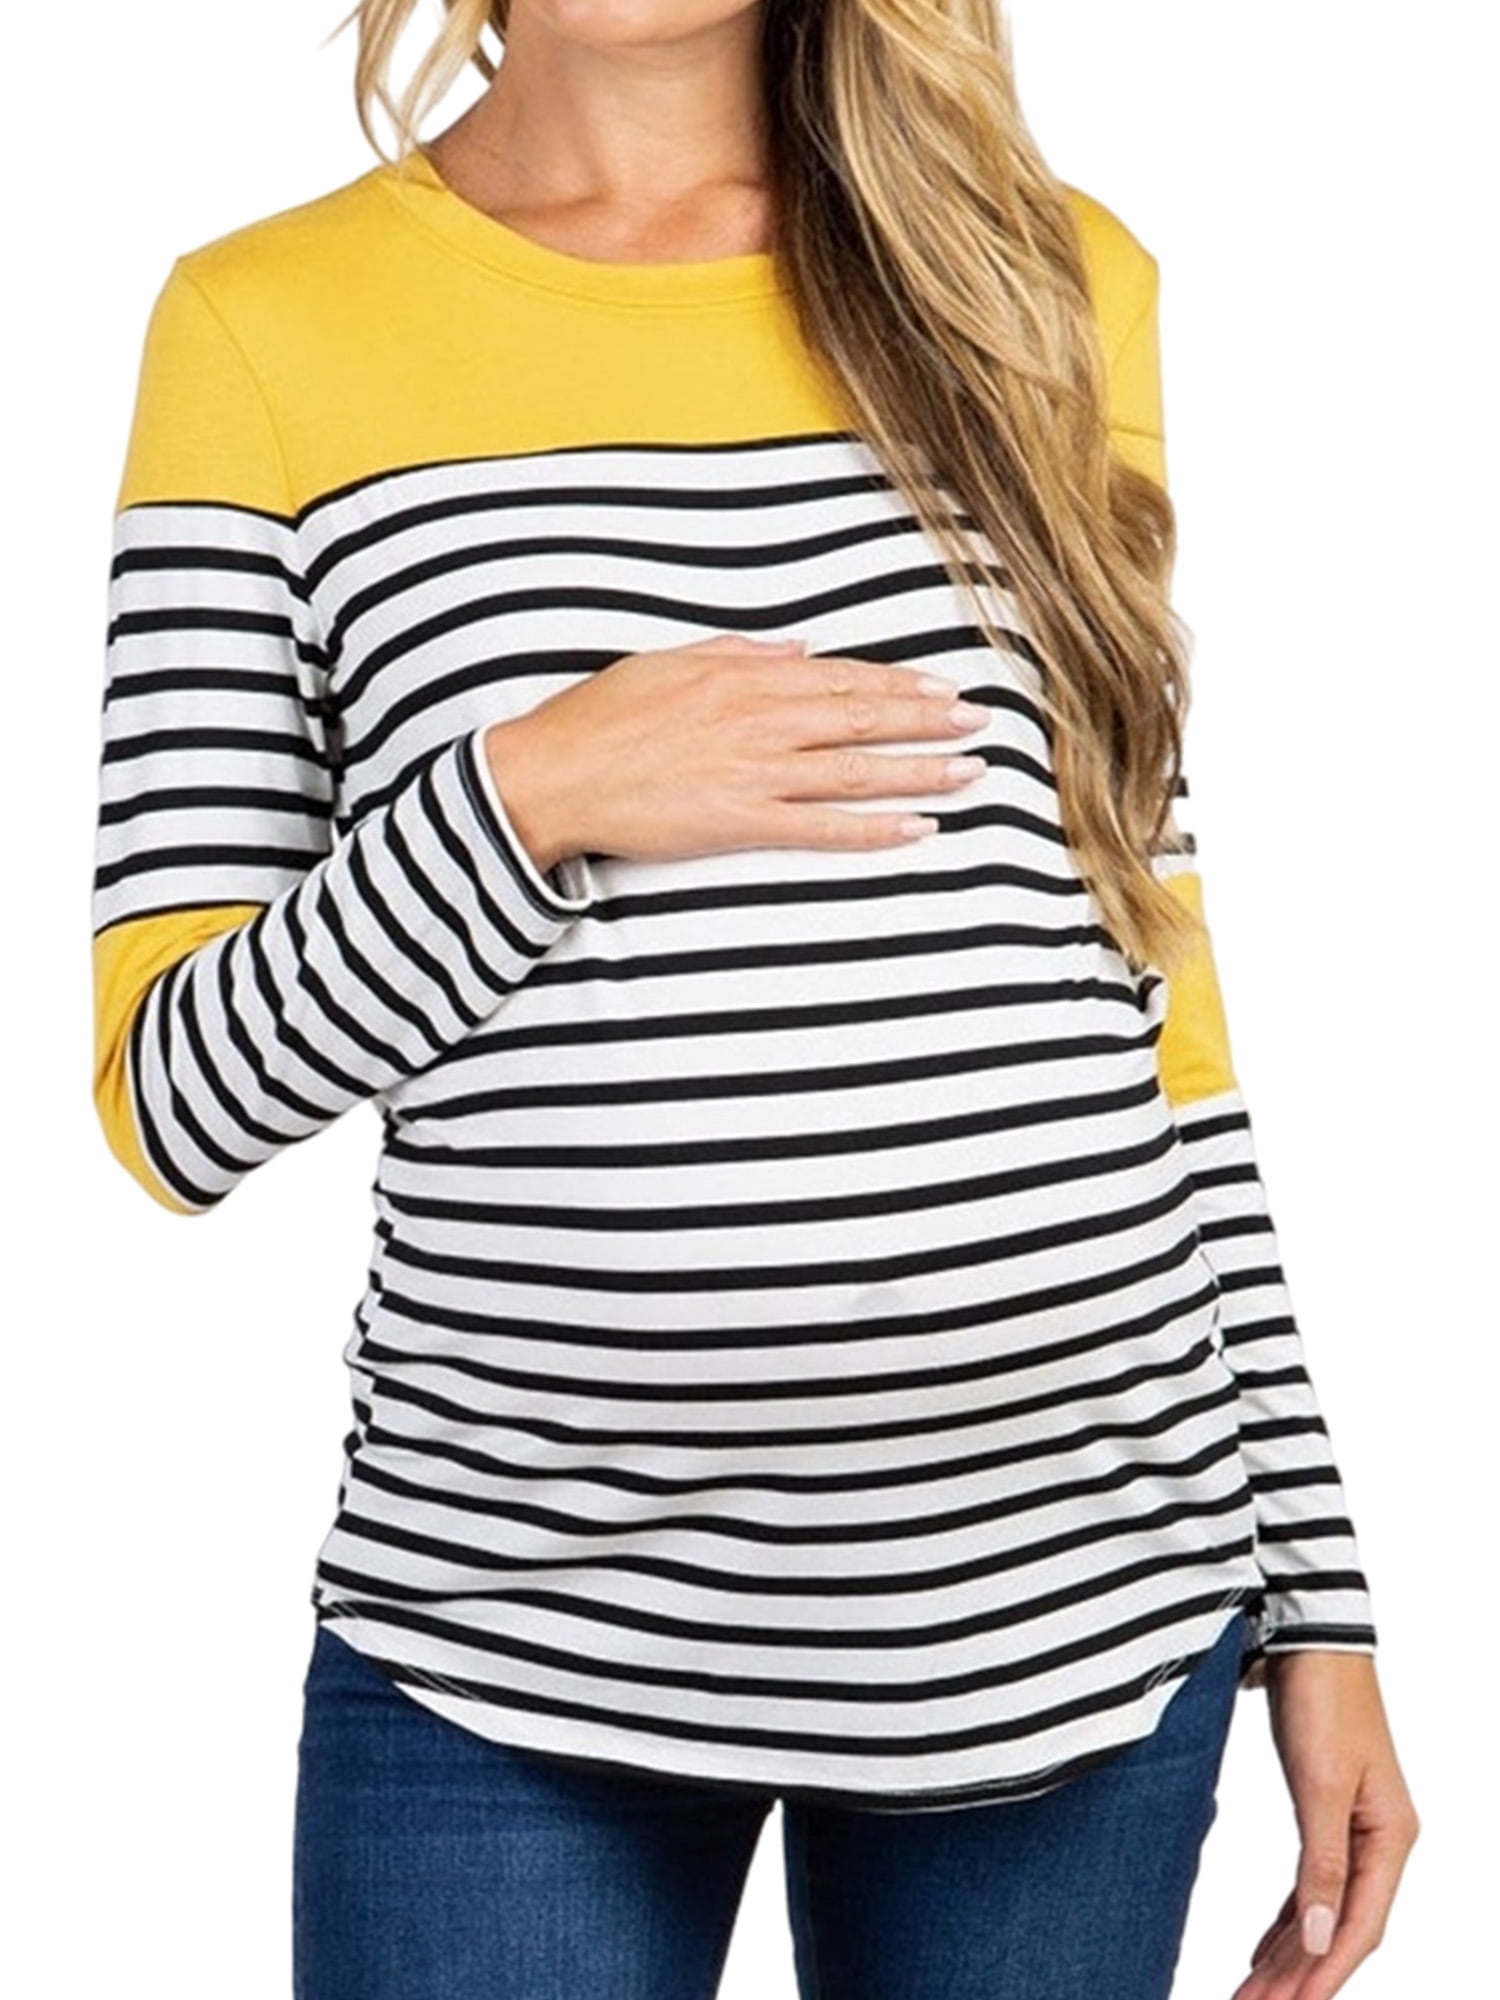 Bhome Long Sleeve Maternity T-Shirt Colorblock Baseball Tee Casual Pregnancy Tunic Top 